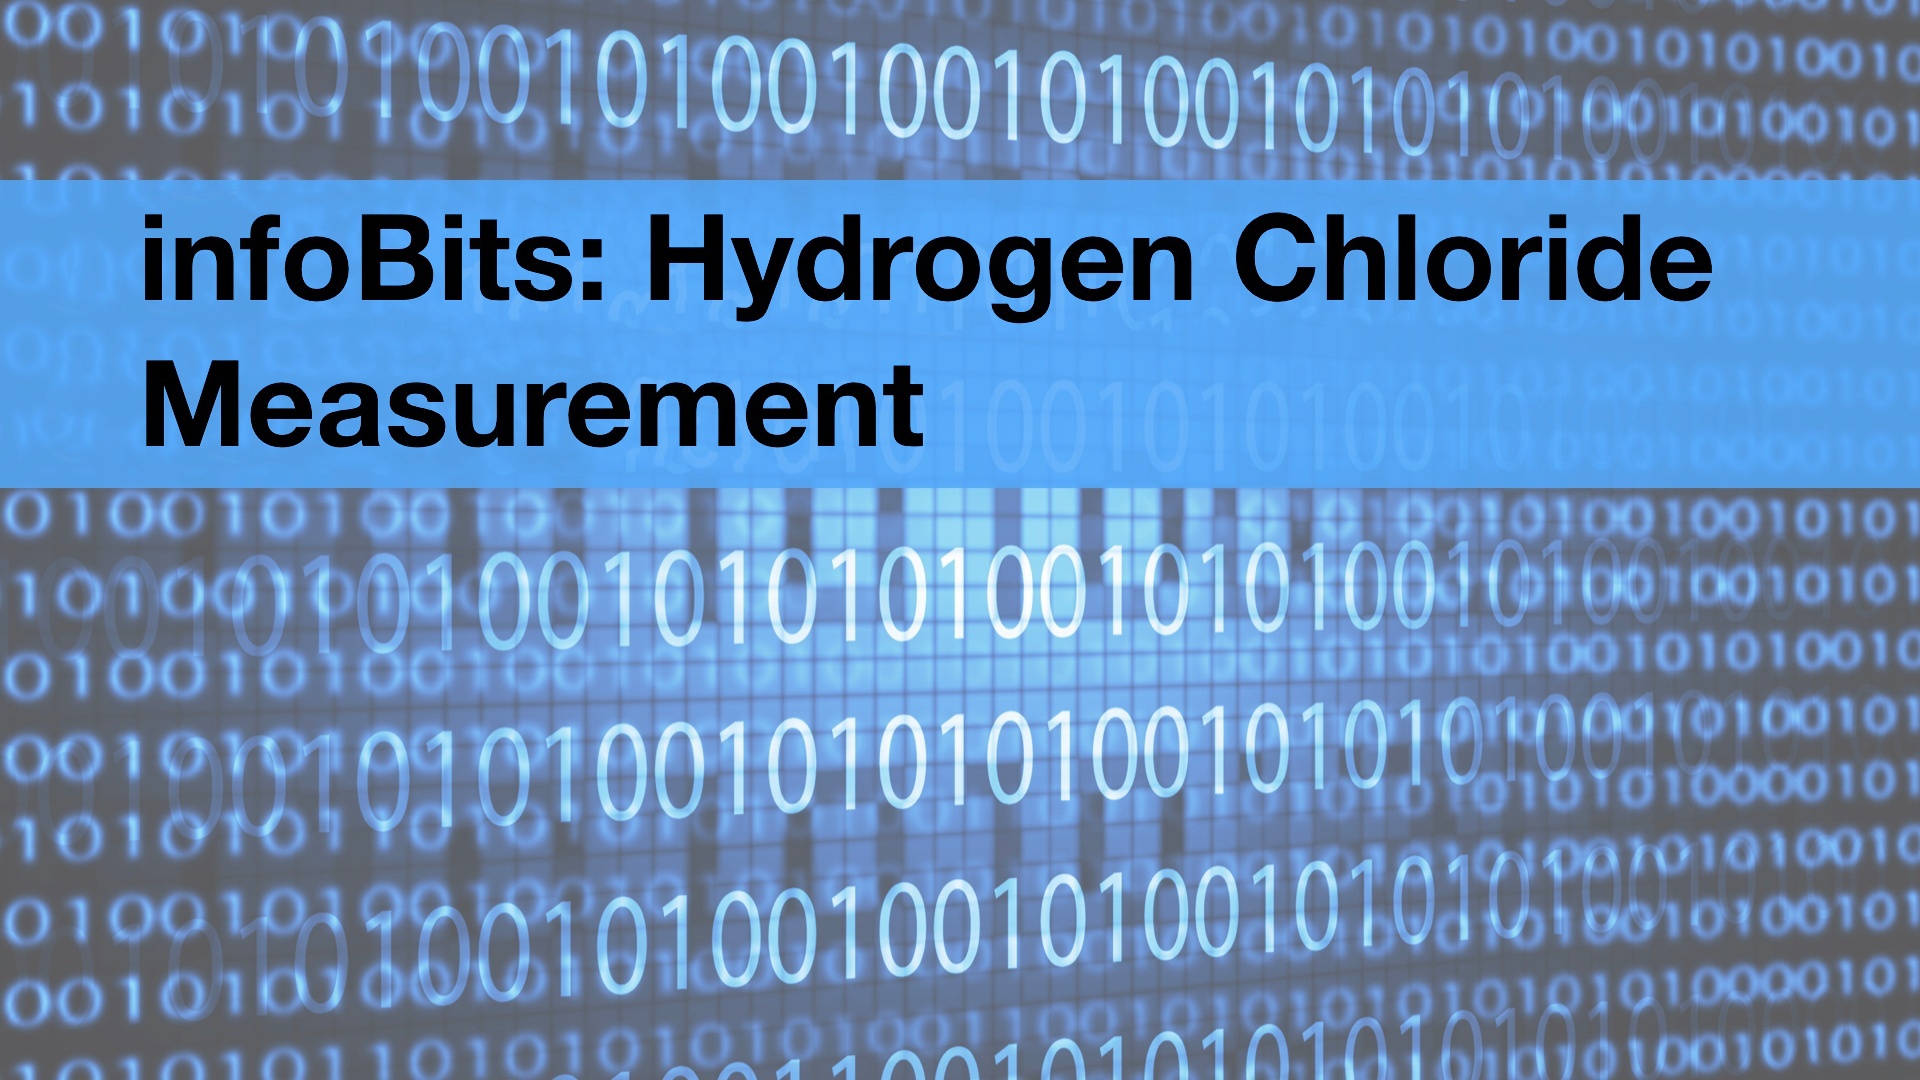 infoBits: Sampling Hydrogen Chloride (HCl) from Stacks